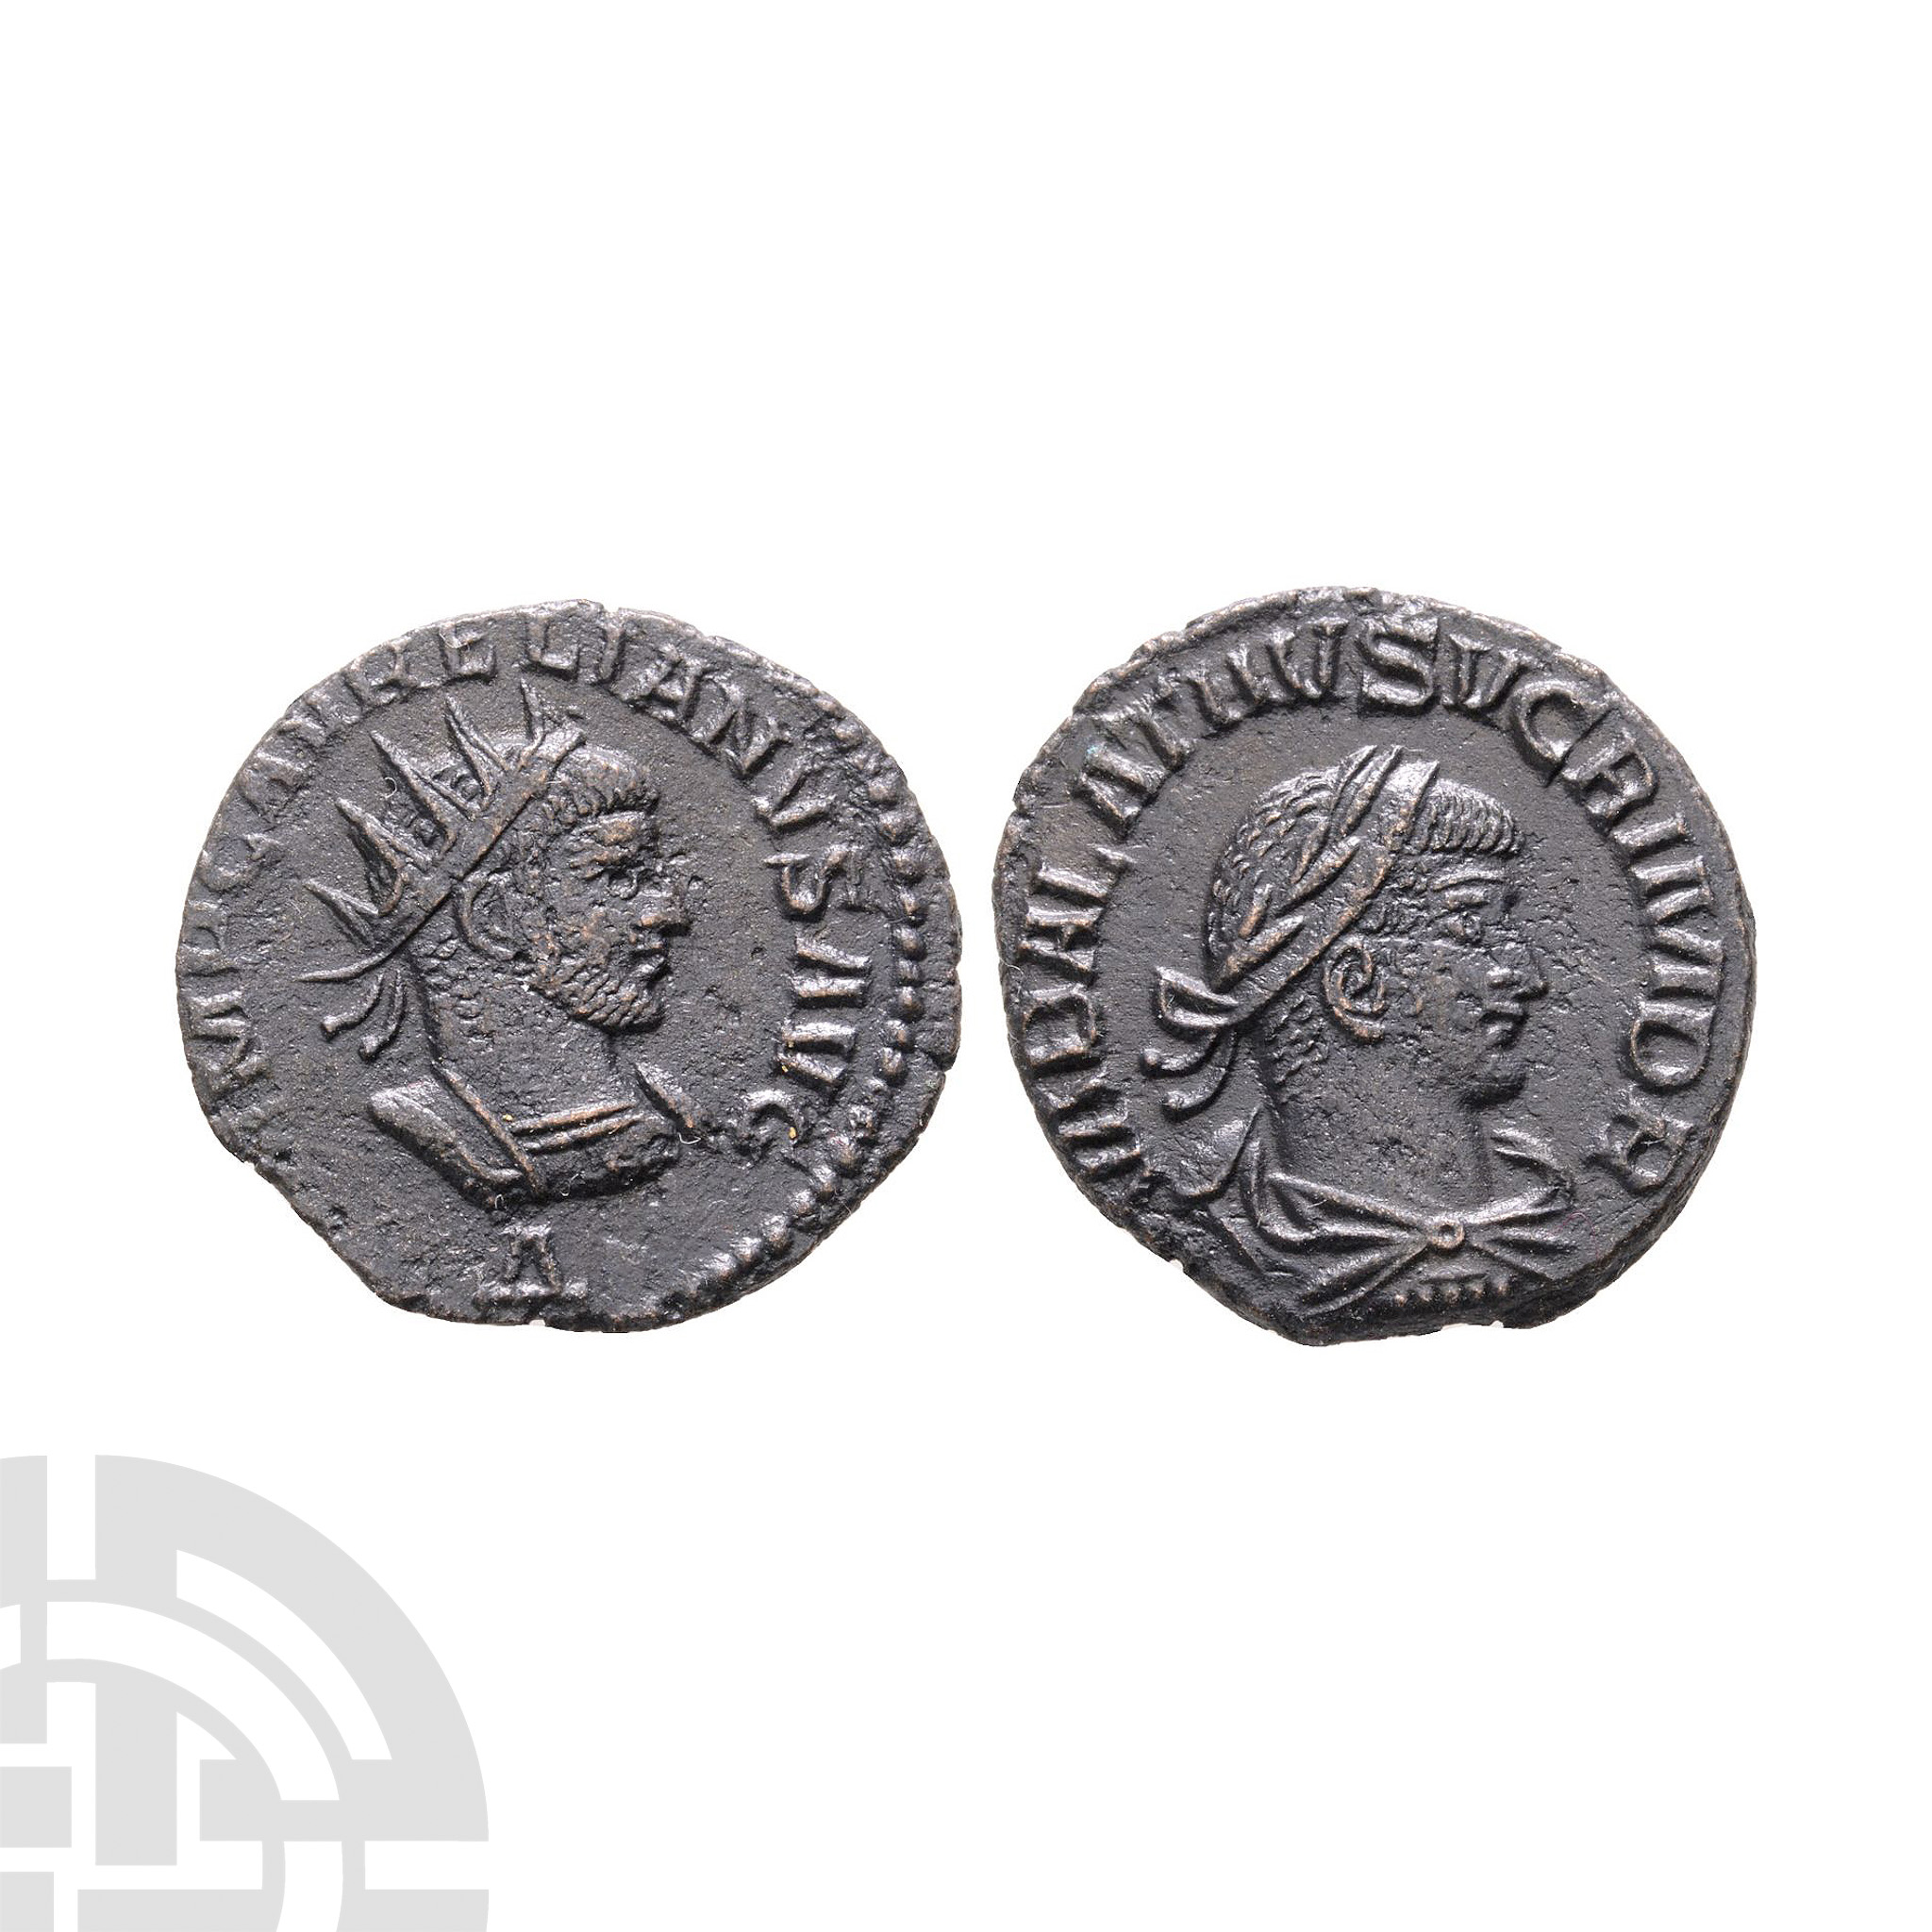 Ancient Roman Imperial Coins - Vabalathus and Aurelian - AE Antoninianus